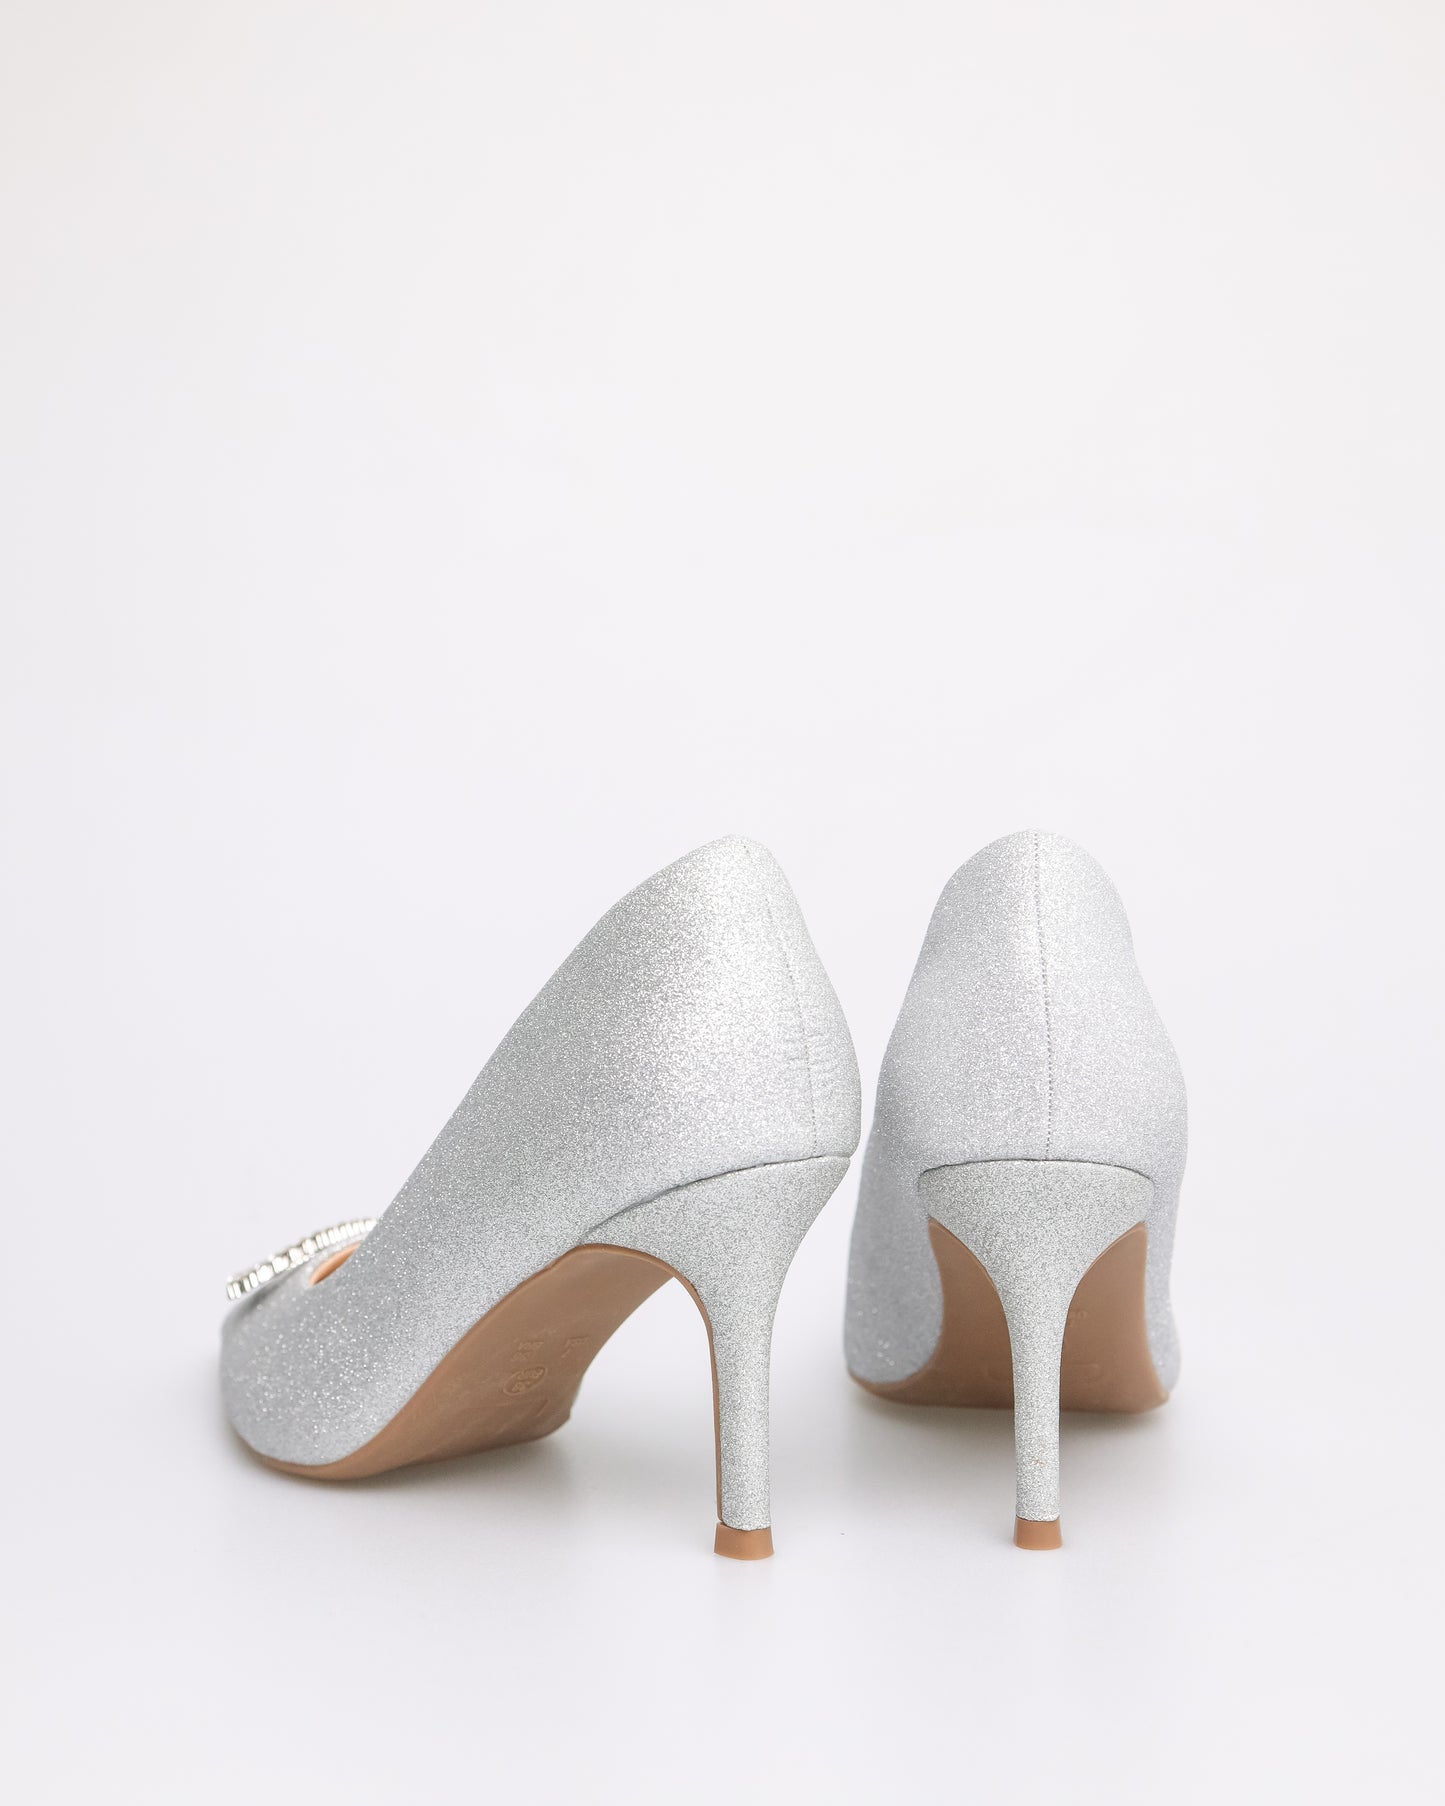 Tomaz NN157 Ladies Diamond Crust Heels (Silver)